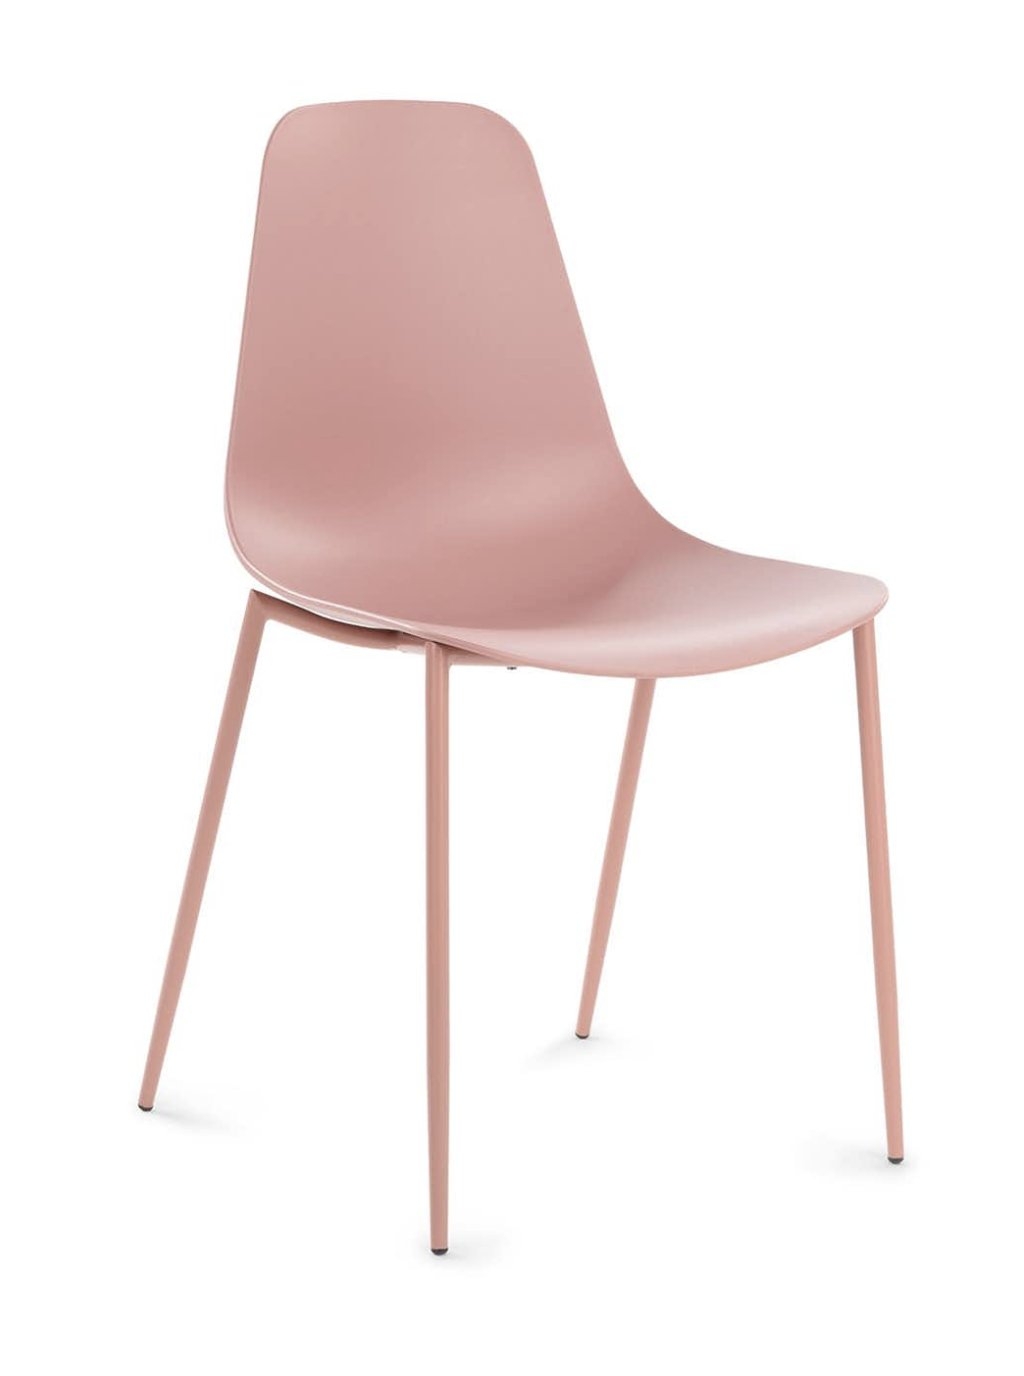 Svelti Dusty Pink Dining Chair - SINGLE - Image 0